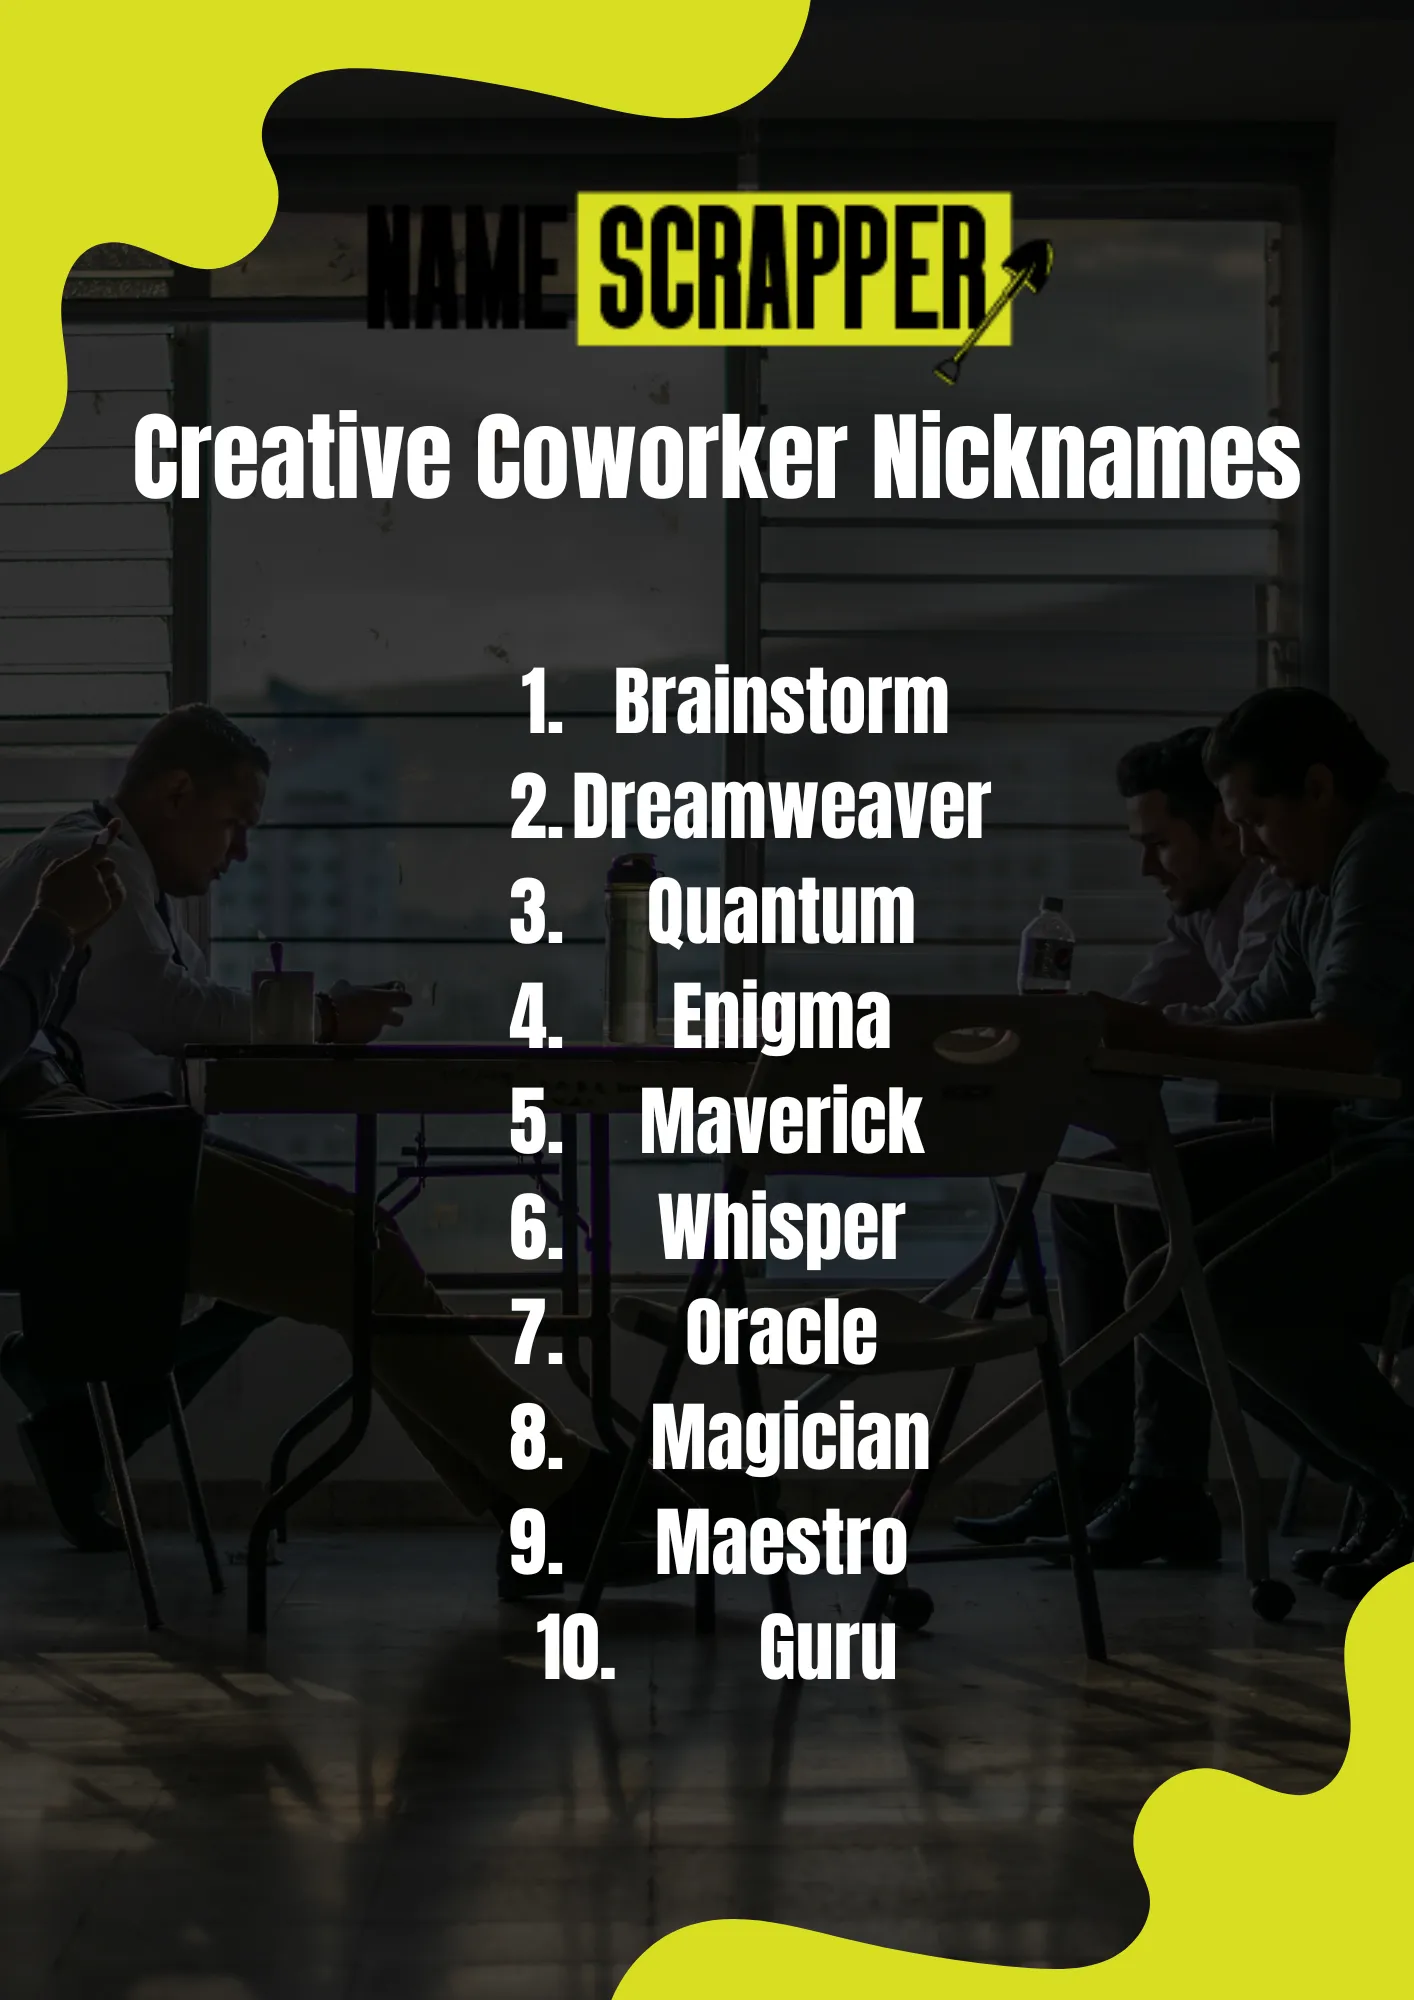 Creative Coworker Nicknames